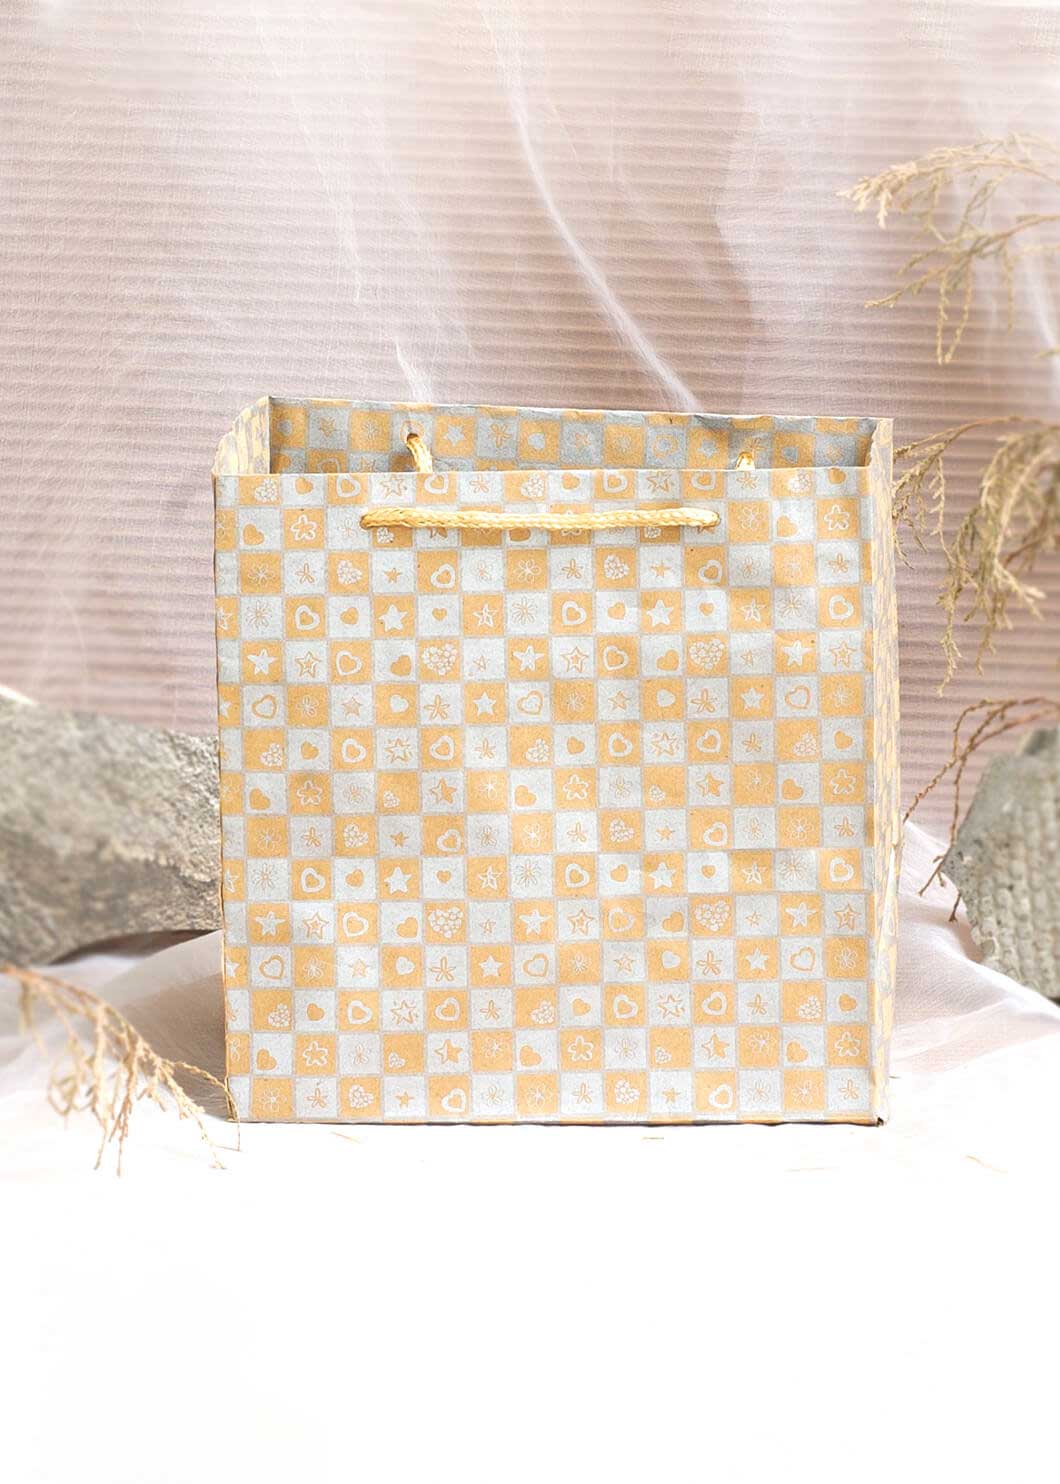 Craft Paper Bag Multi Pattern - Craft Bag - Golden Silver Red - 7x5 Paper Bag